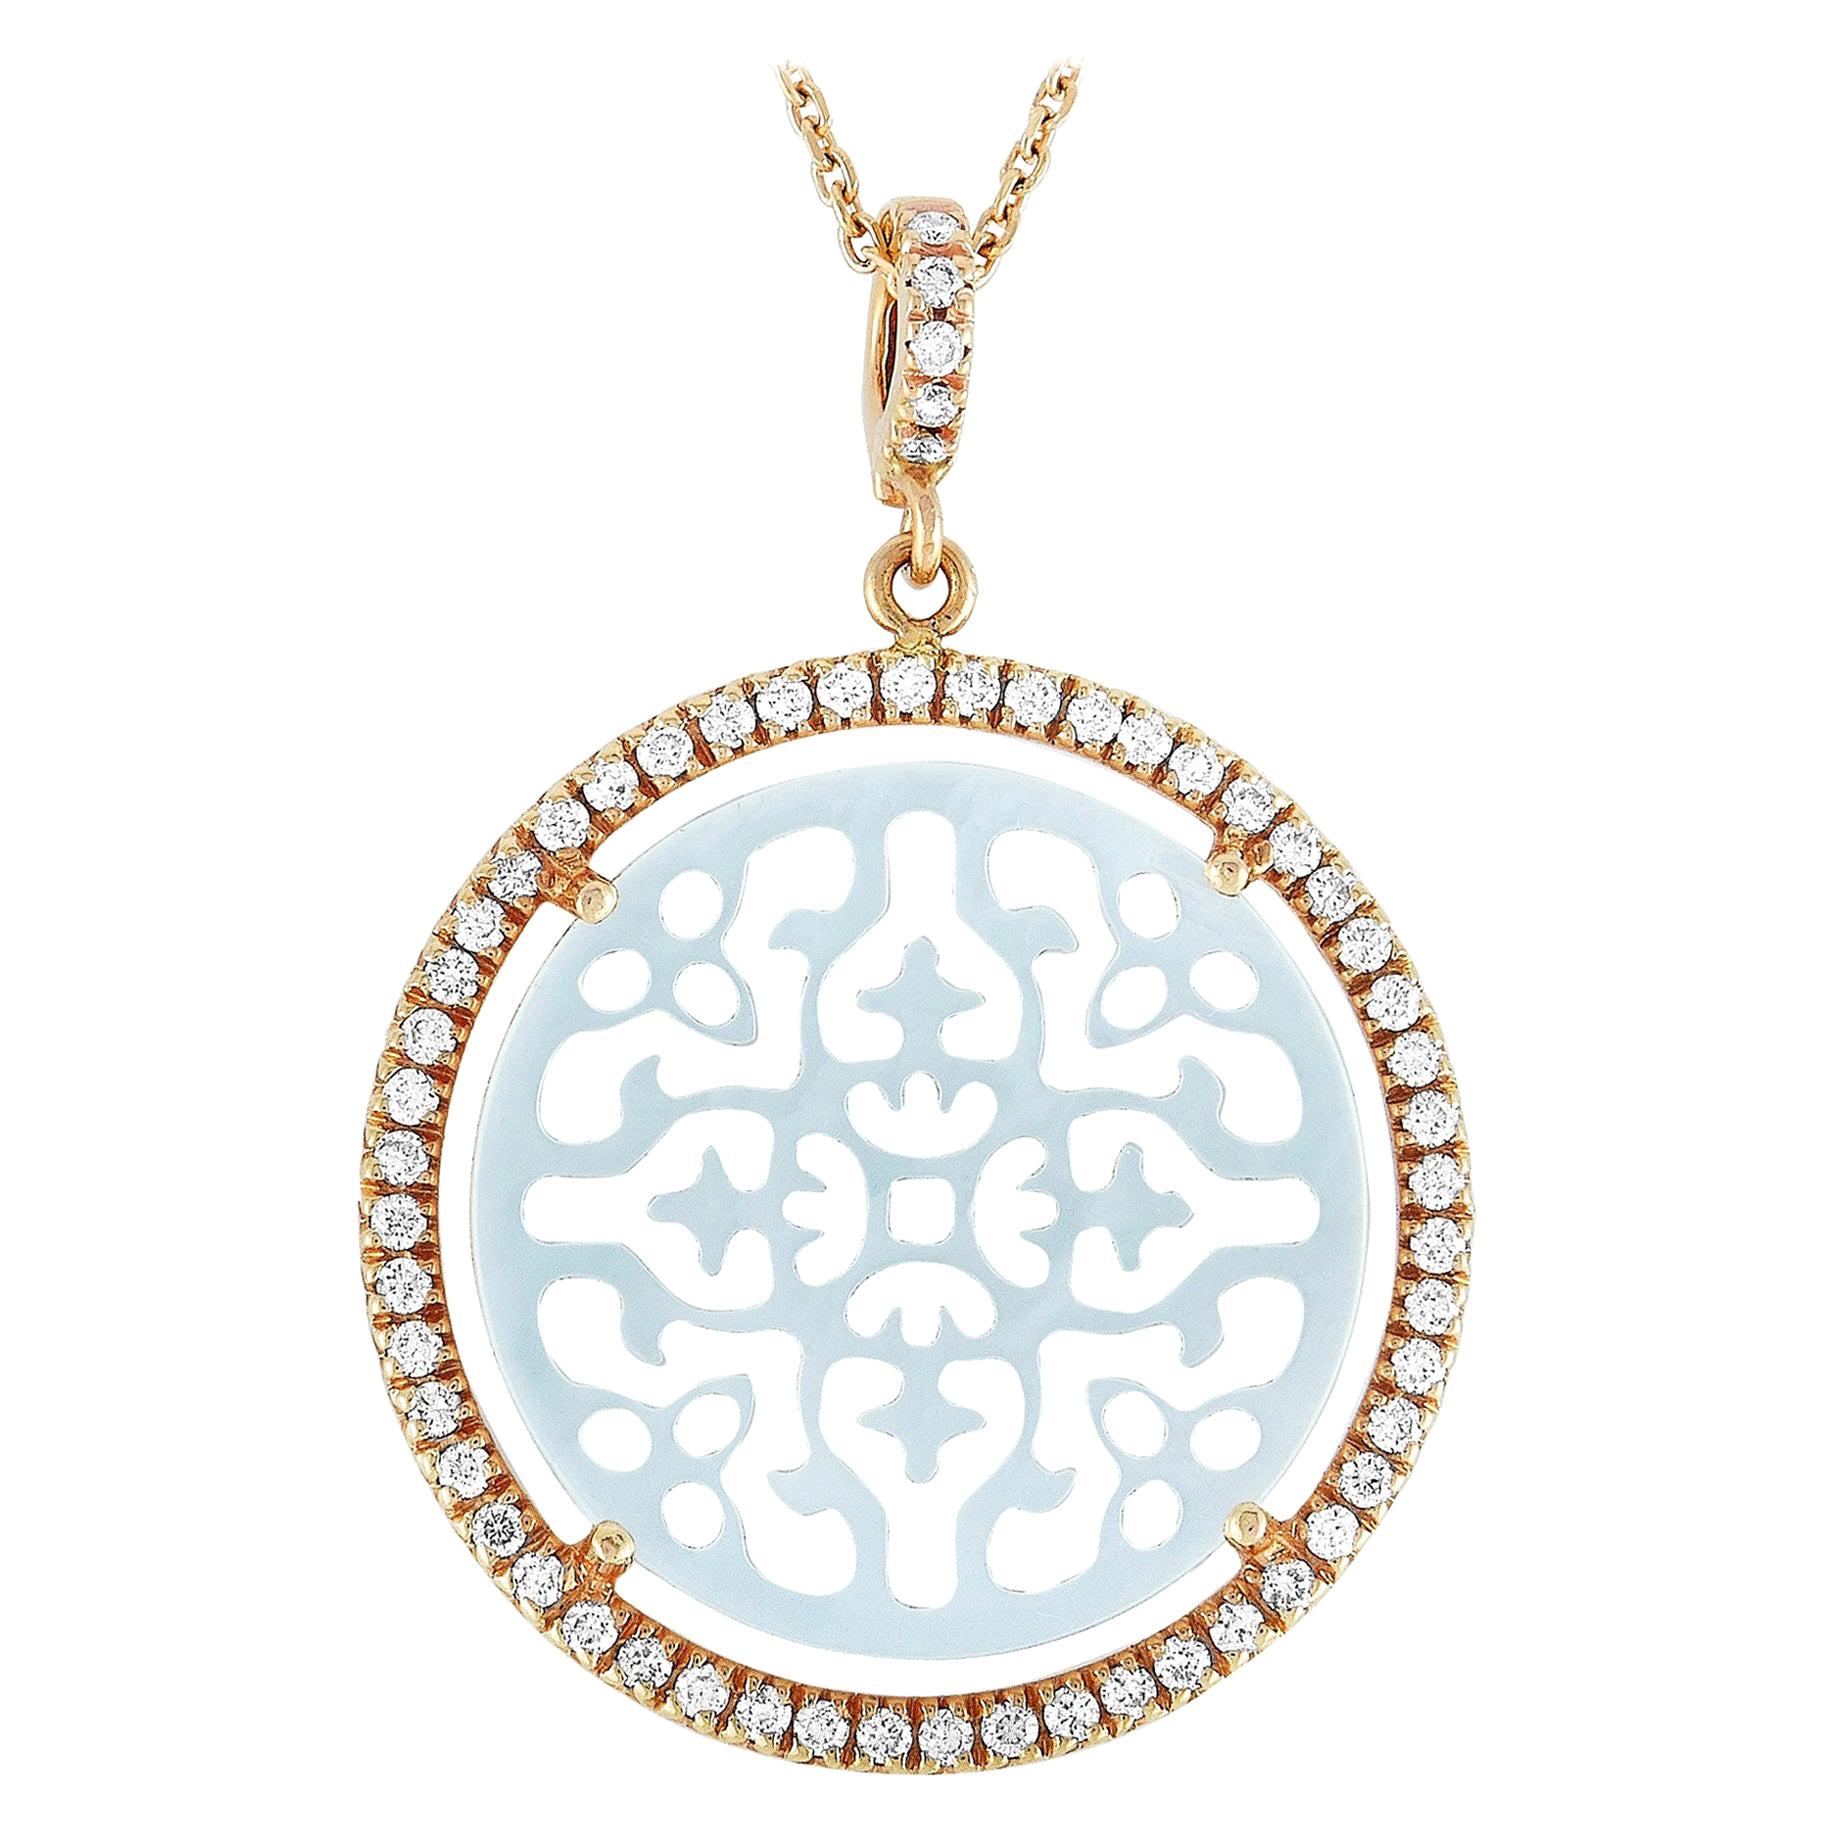 Zoccai 18 Karat Gold 0.46 Carat Diamond and Mother of Pearl Pendant Necklace